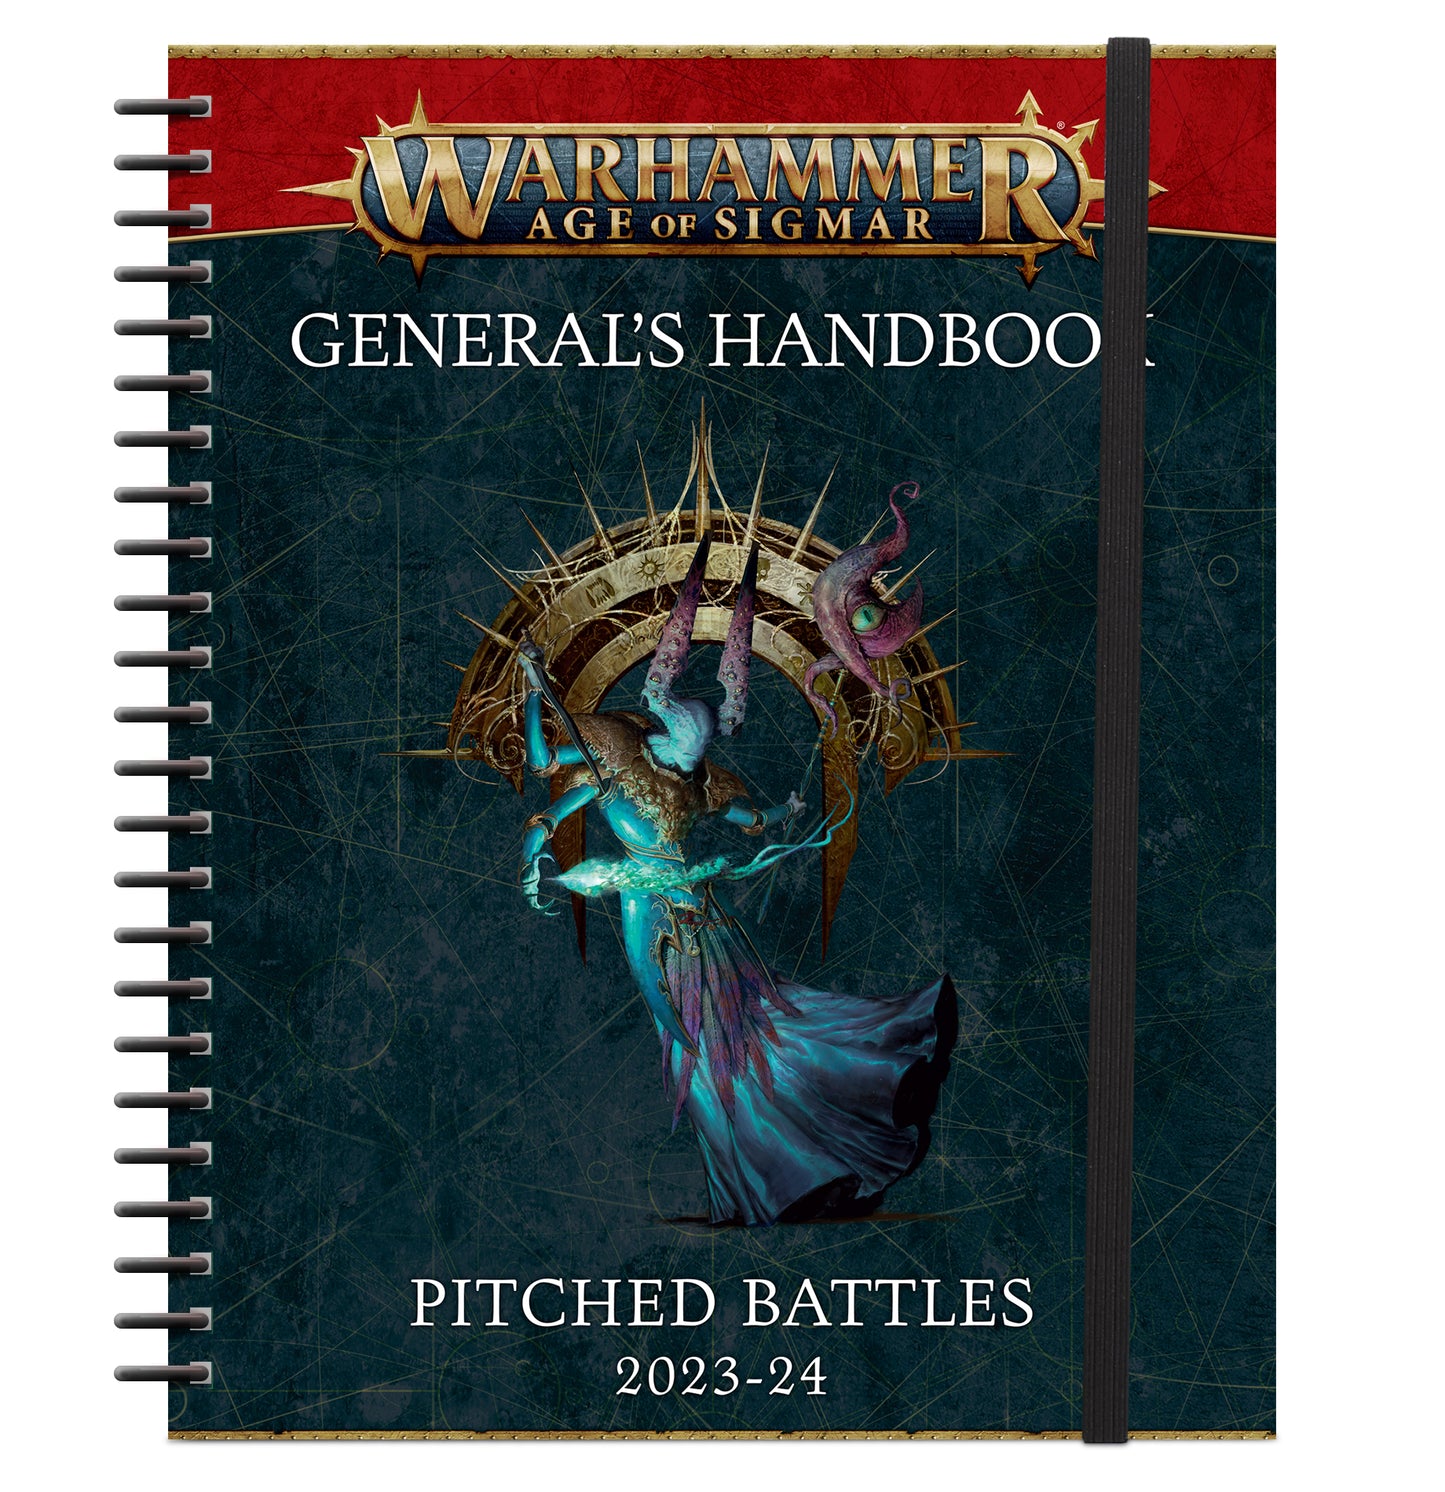 Warhammer Age of Sigmar: General's Handbook 2023